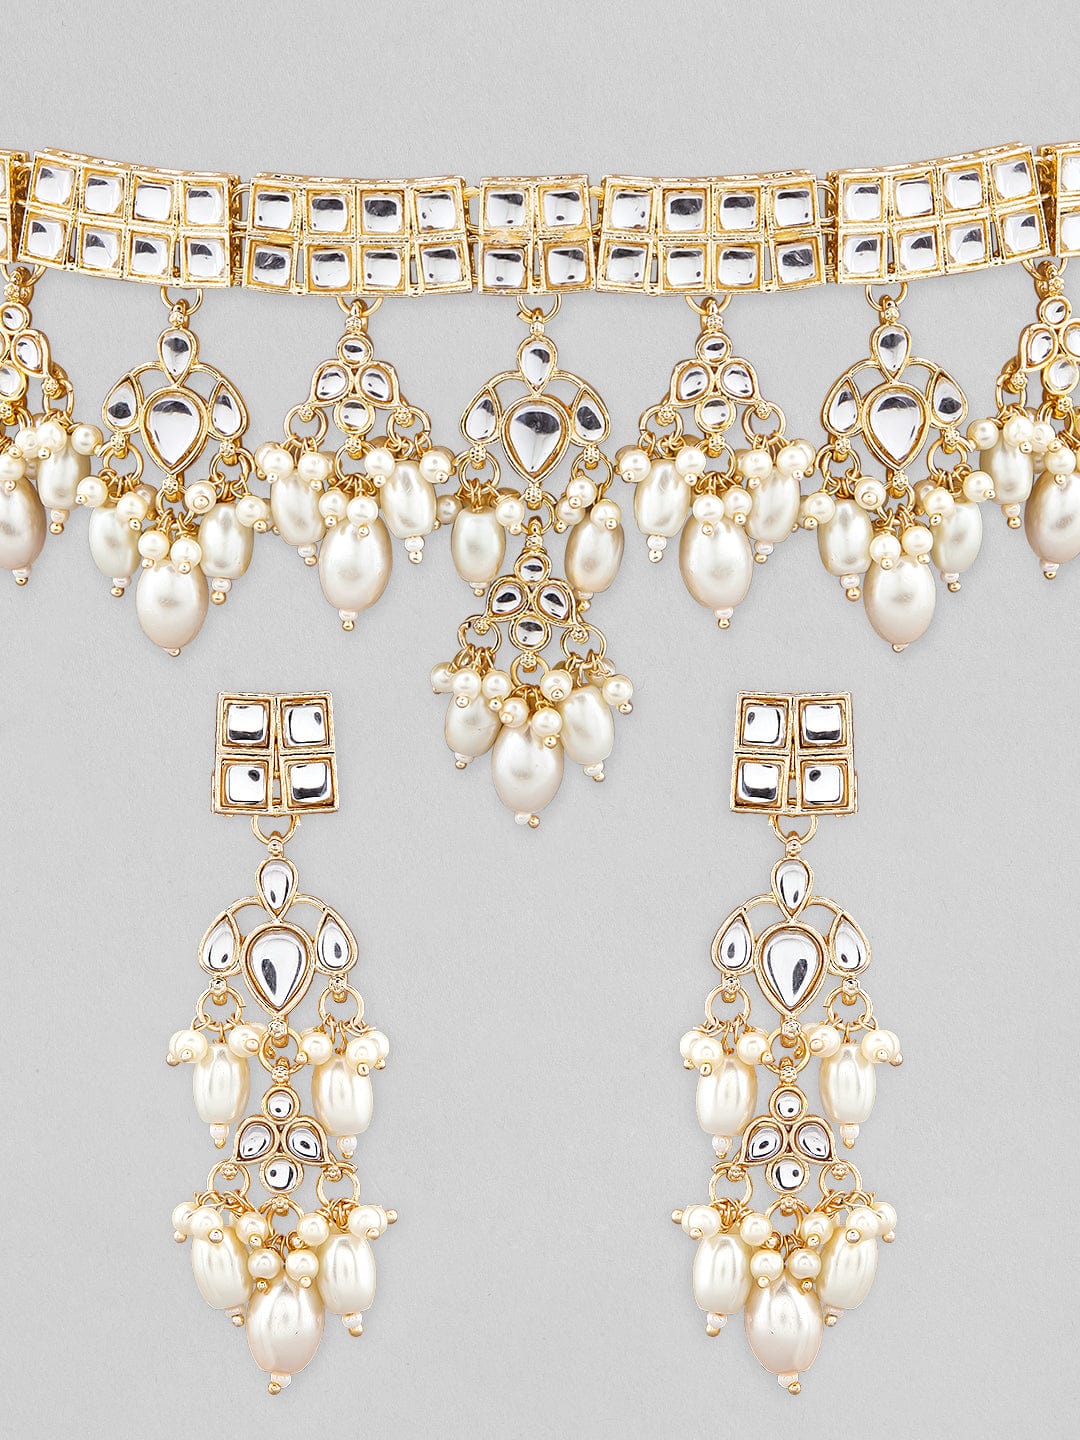 Rubans Gold Plated Kundan Choker Set Studded With Stones And Pearls. Choker Necklace Set